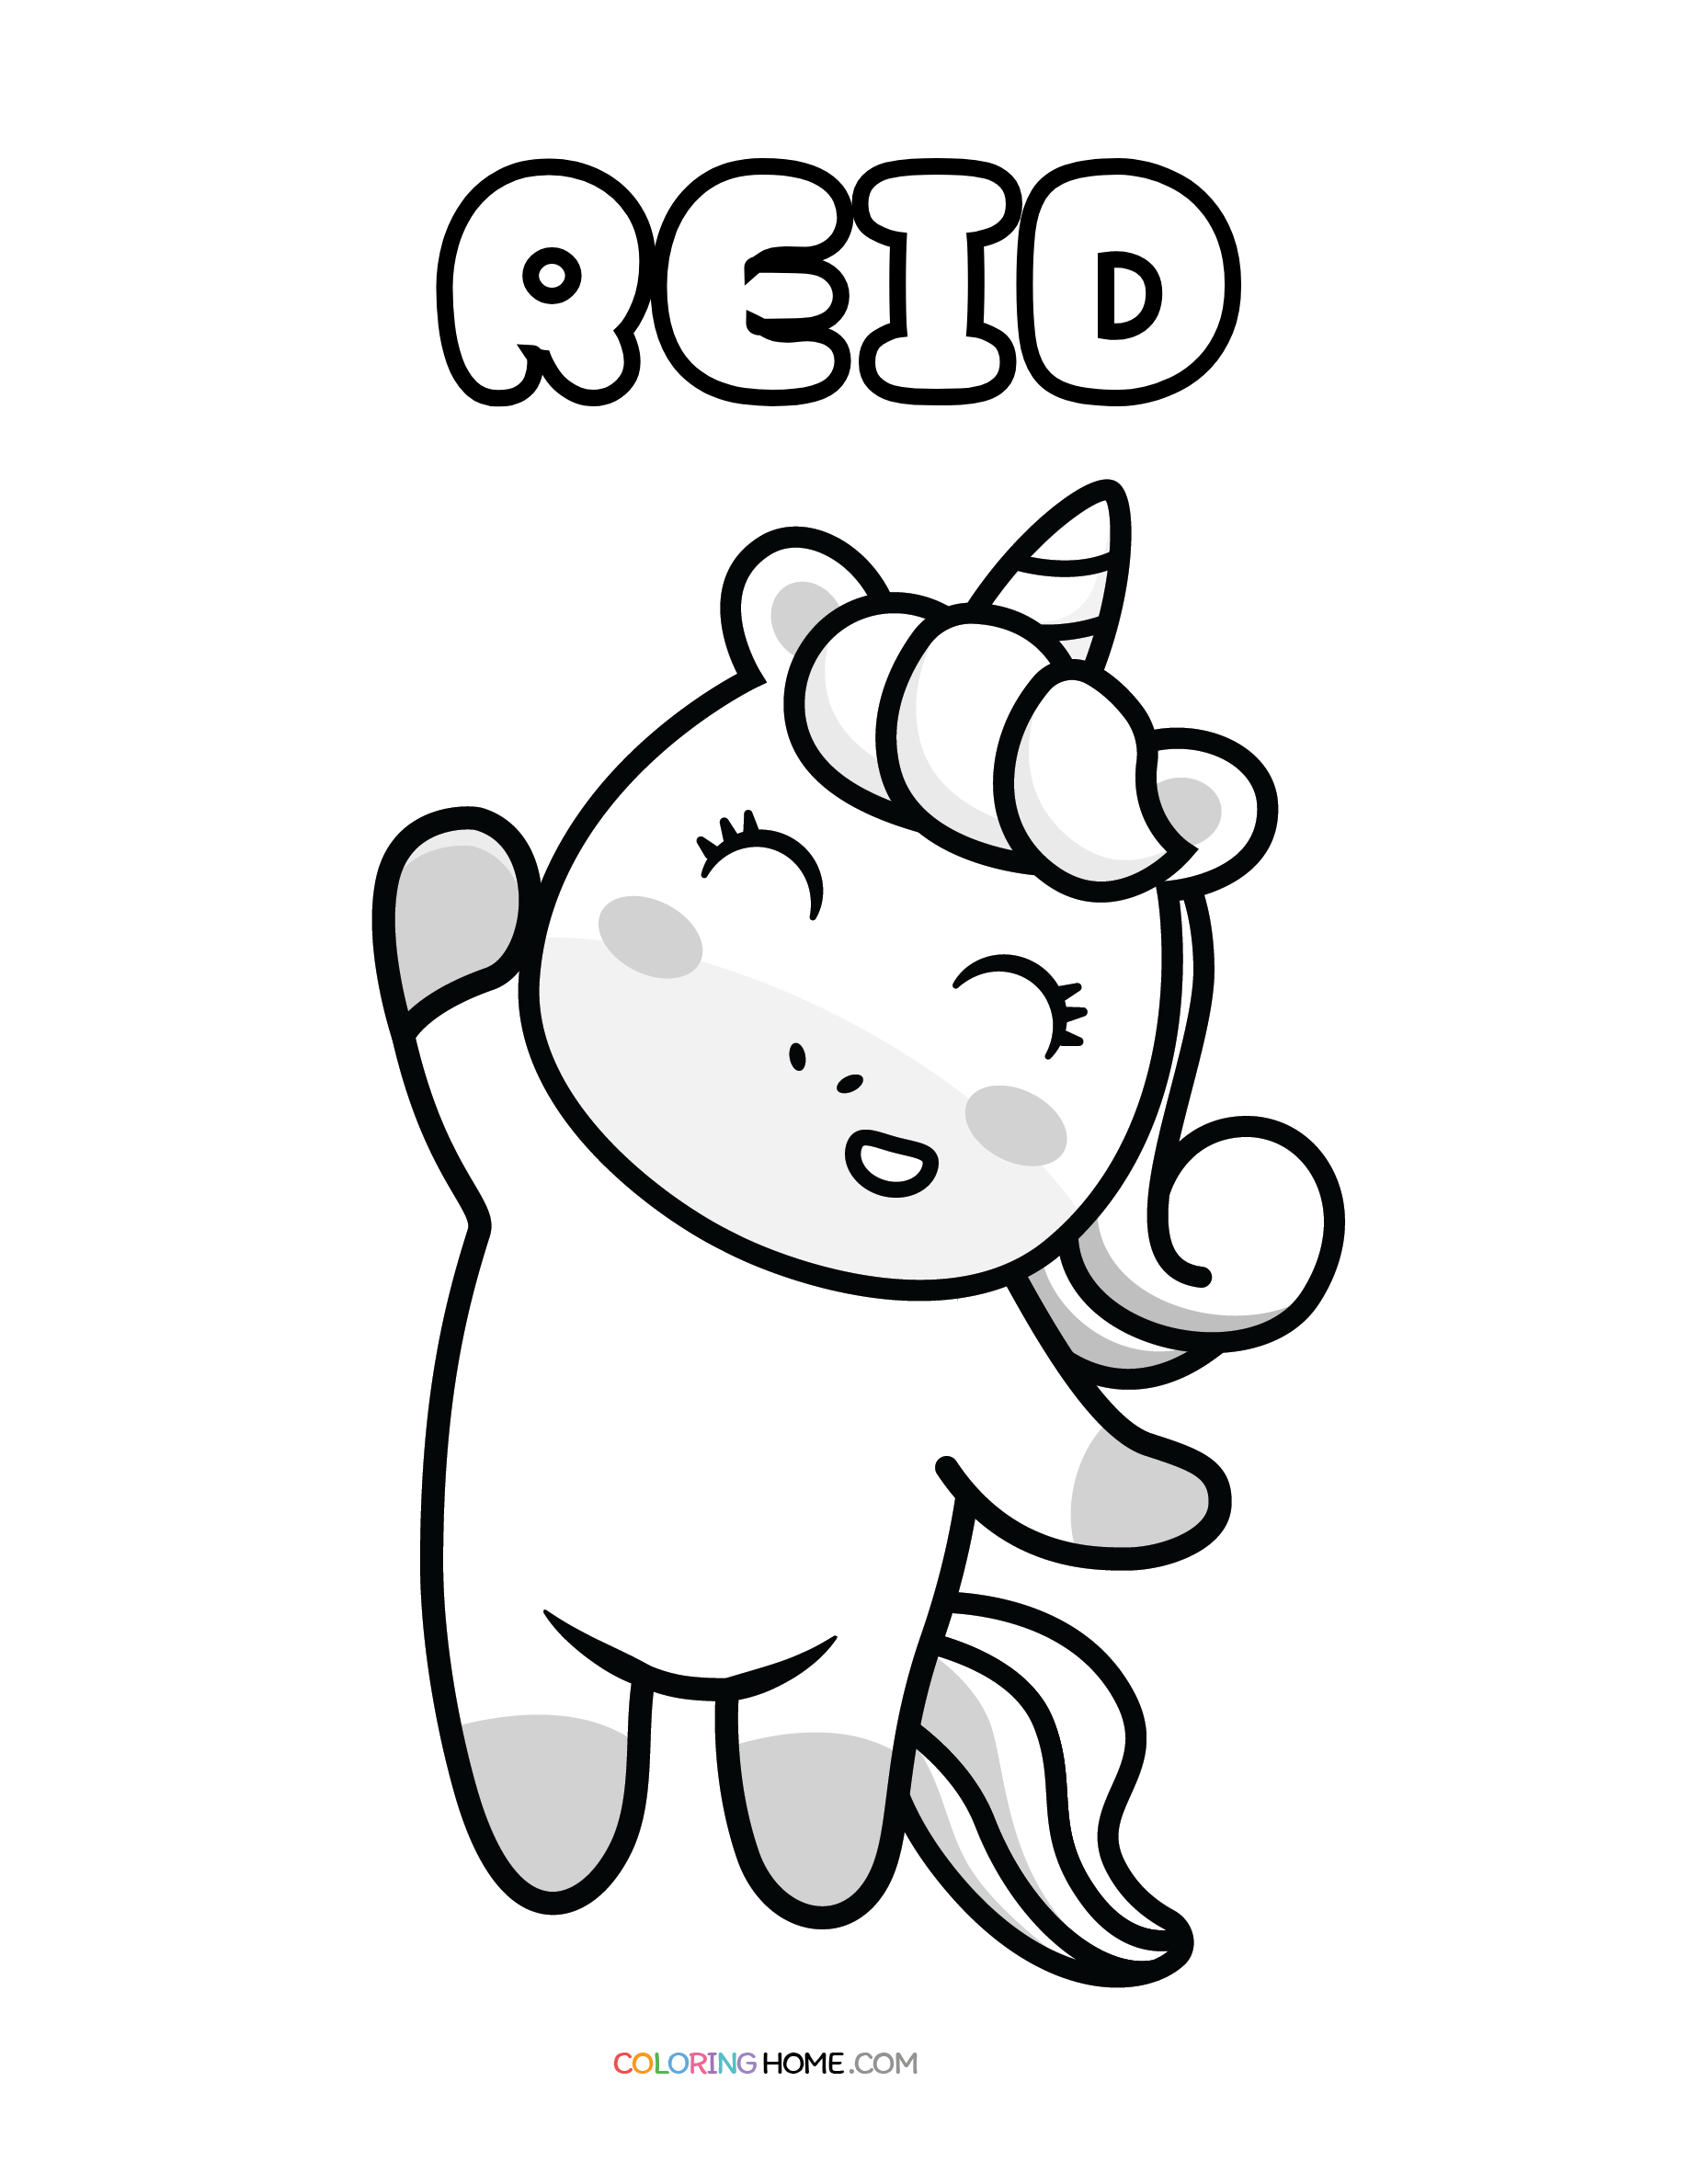 Reid unicorn coloring page